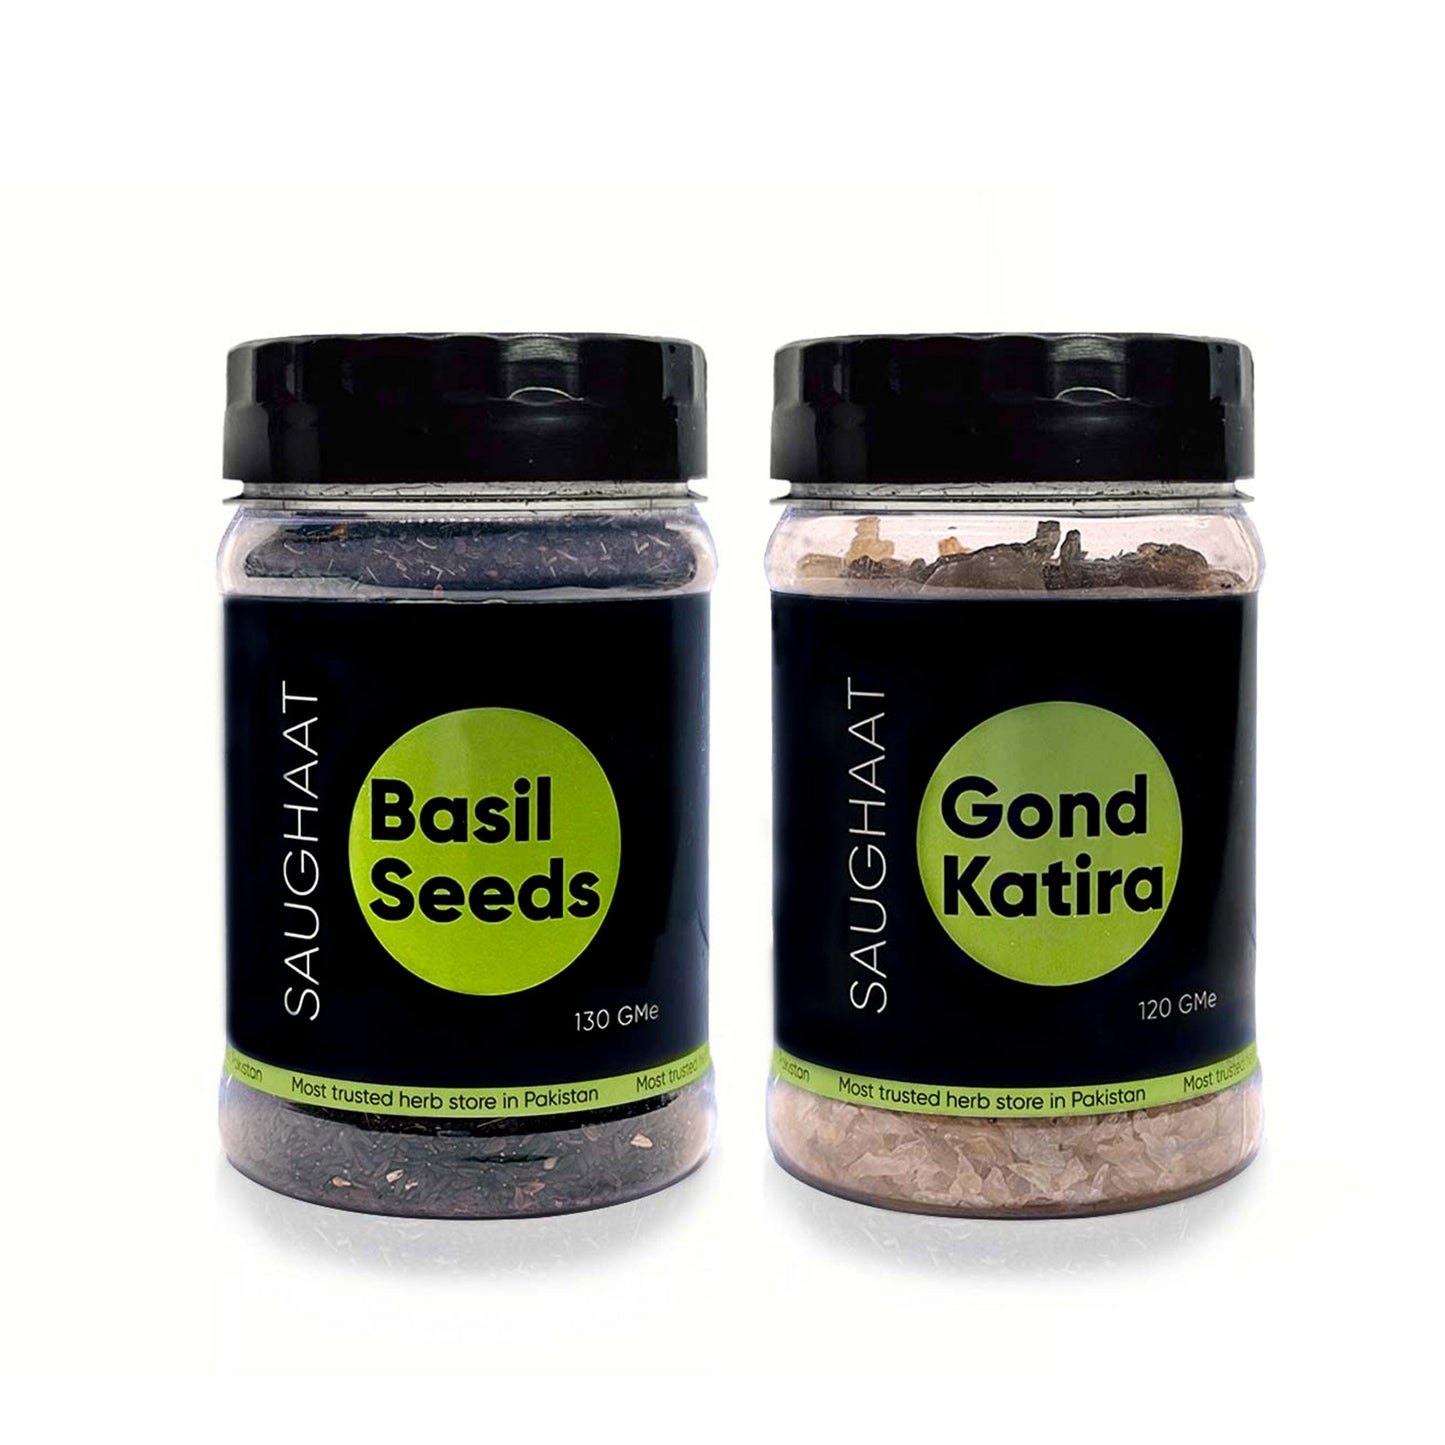 Basil Seeds and Gond Katira